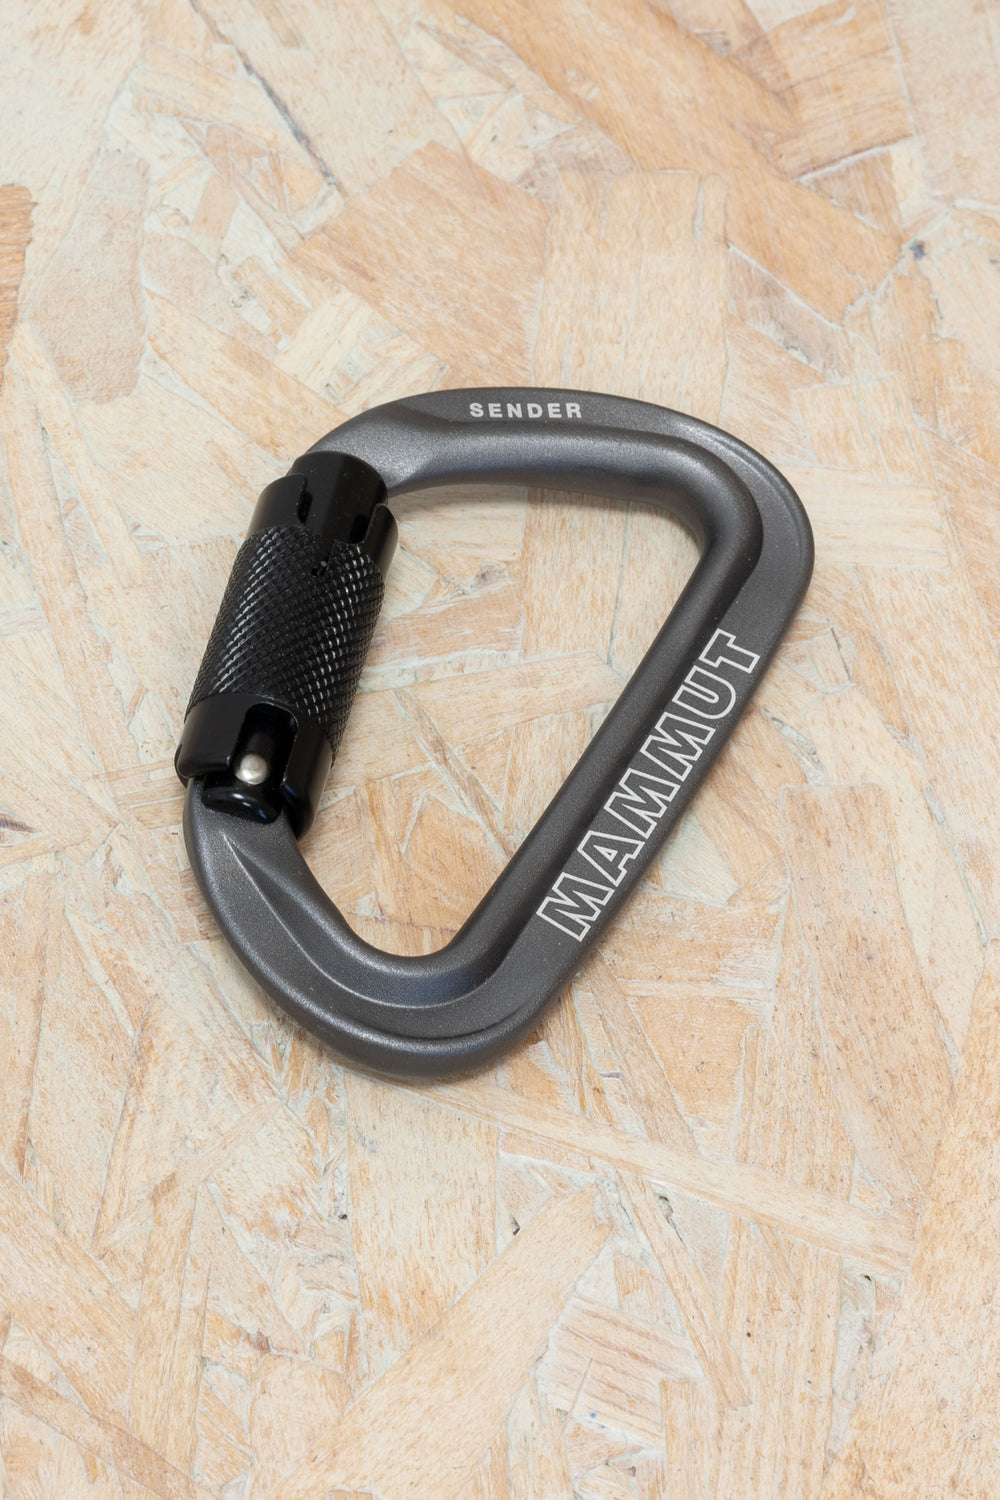 Mammut - Sender Twistlock Carabiner